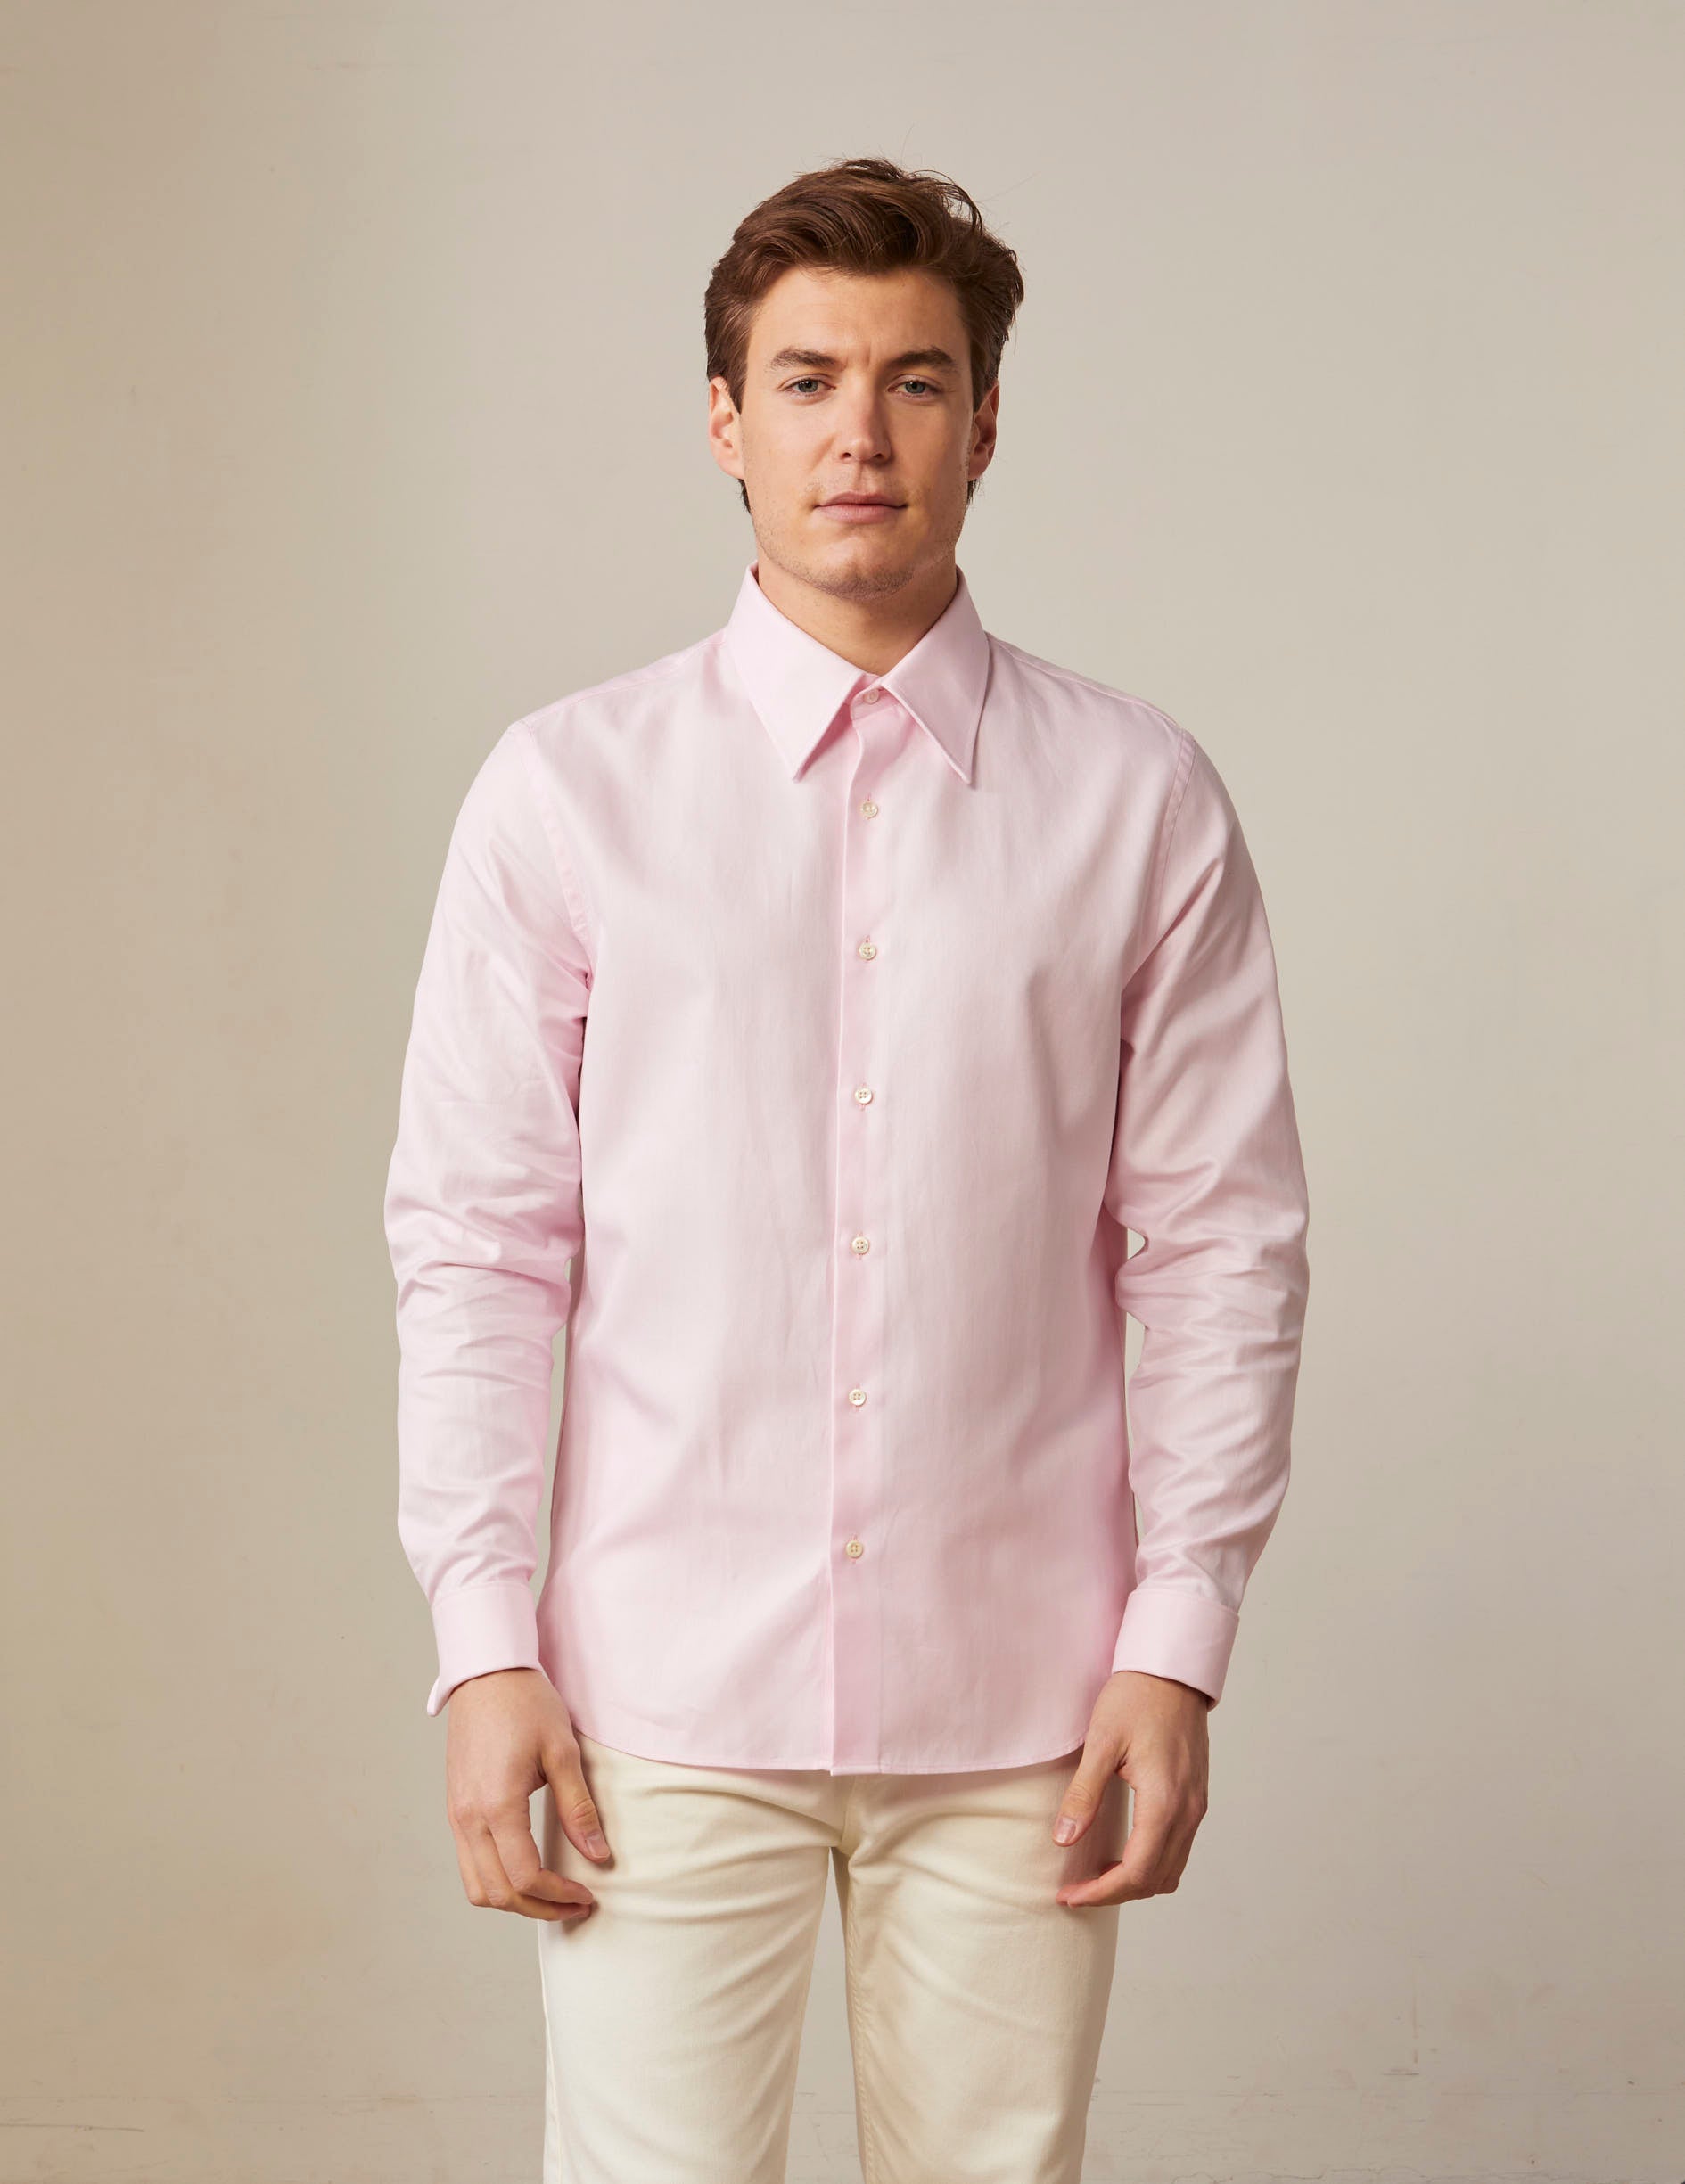 Light pink semi-fitted shirt - Chevron - Majestic Collar - French Cuffs